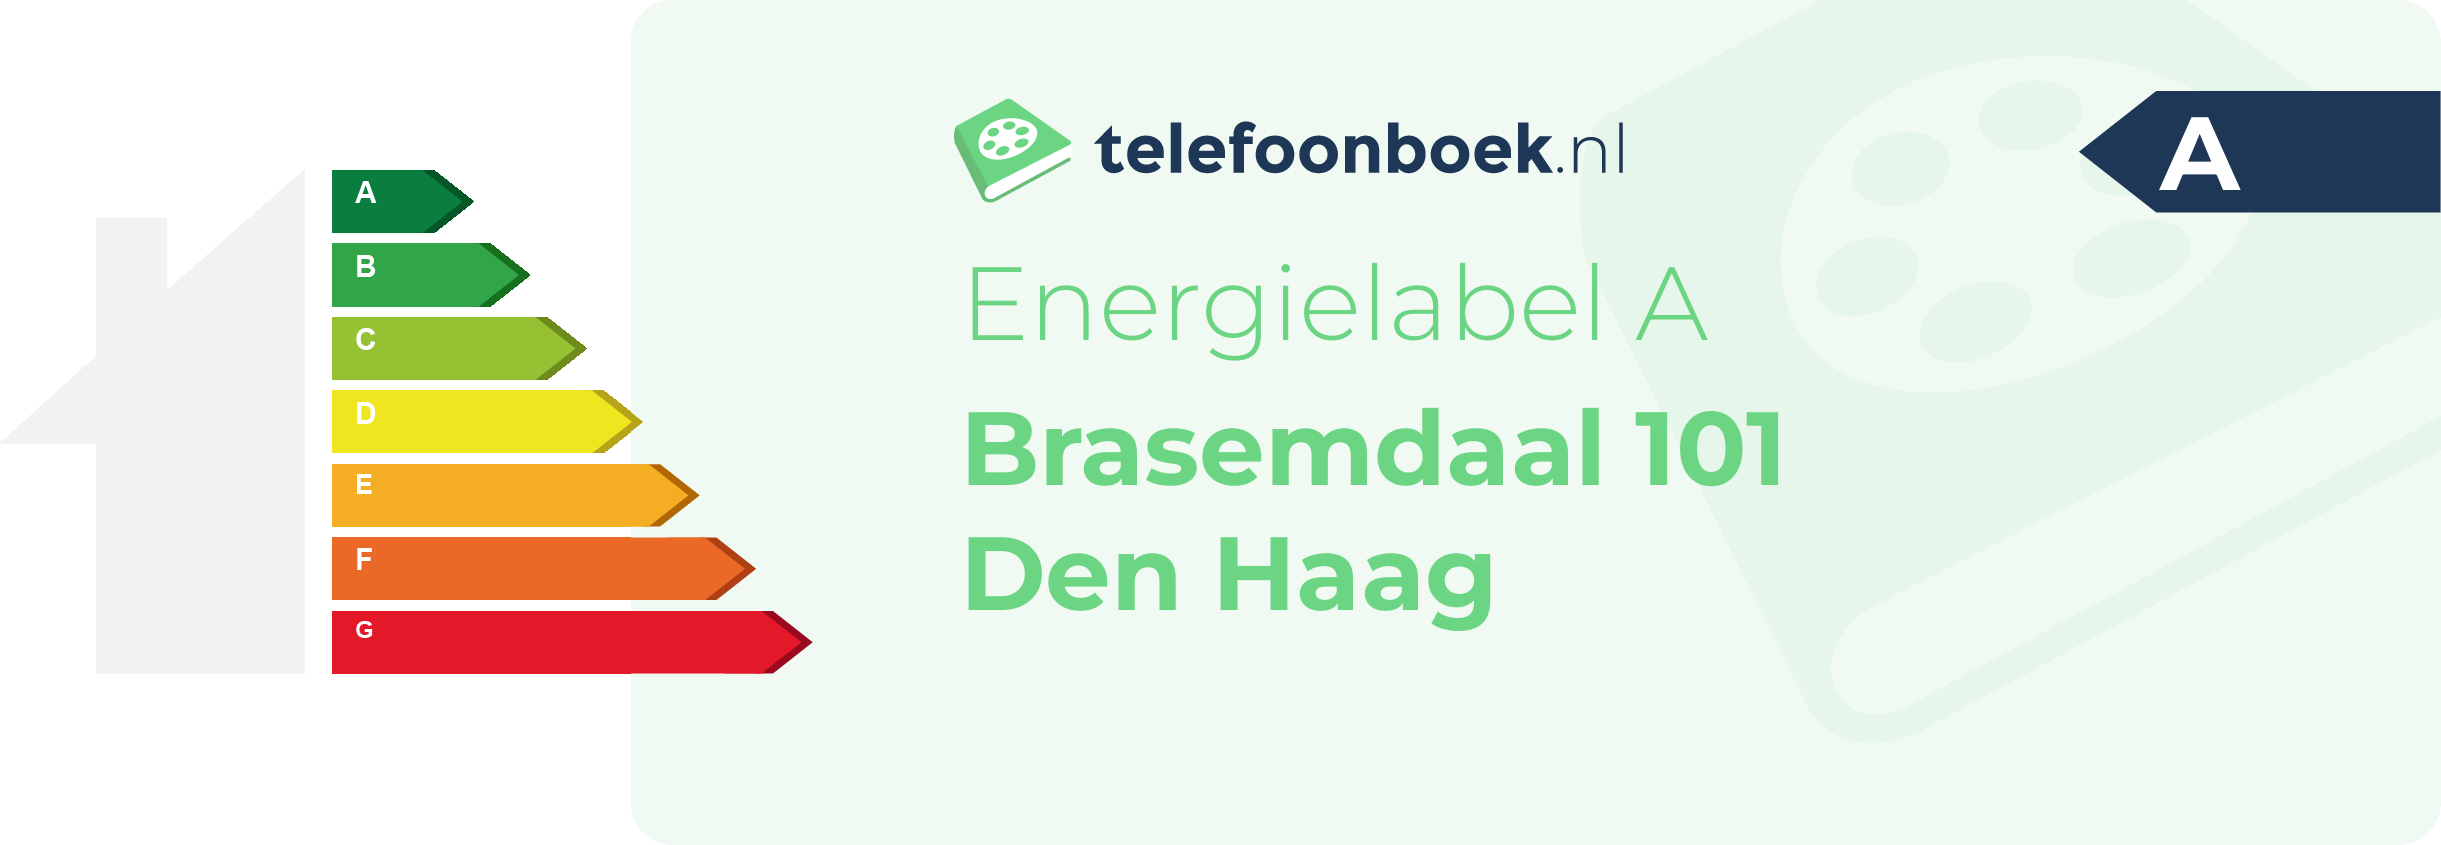 Energielabel Brasemdaal 101 Den Haag